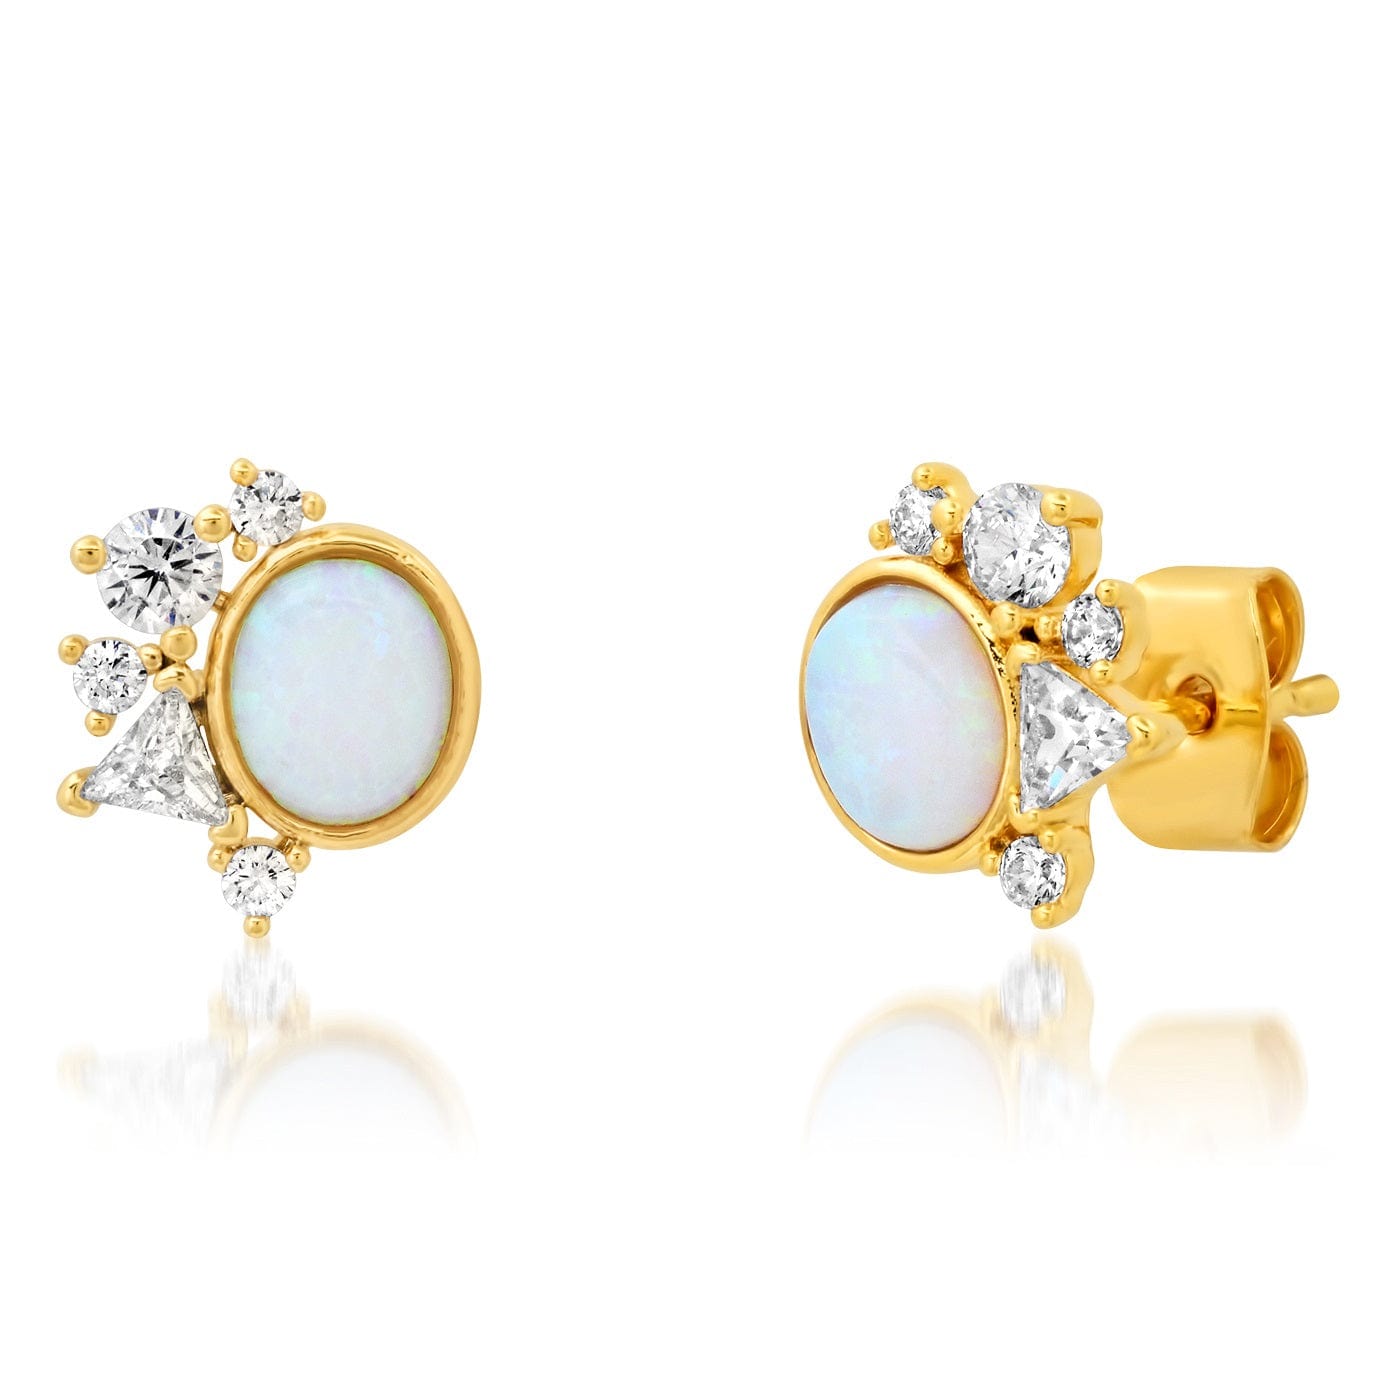 TAI JEWELRY Earrings Dainty Opal And CZ Cluster Studs